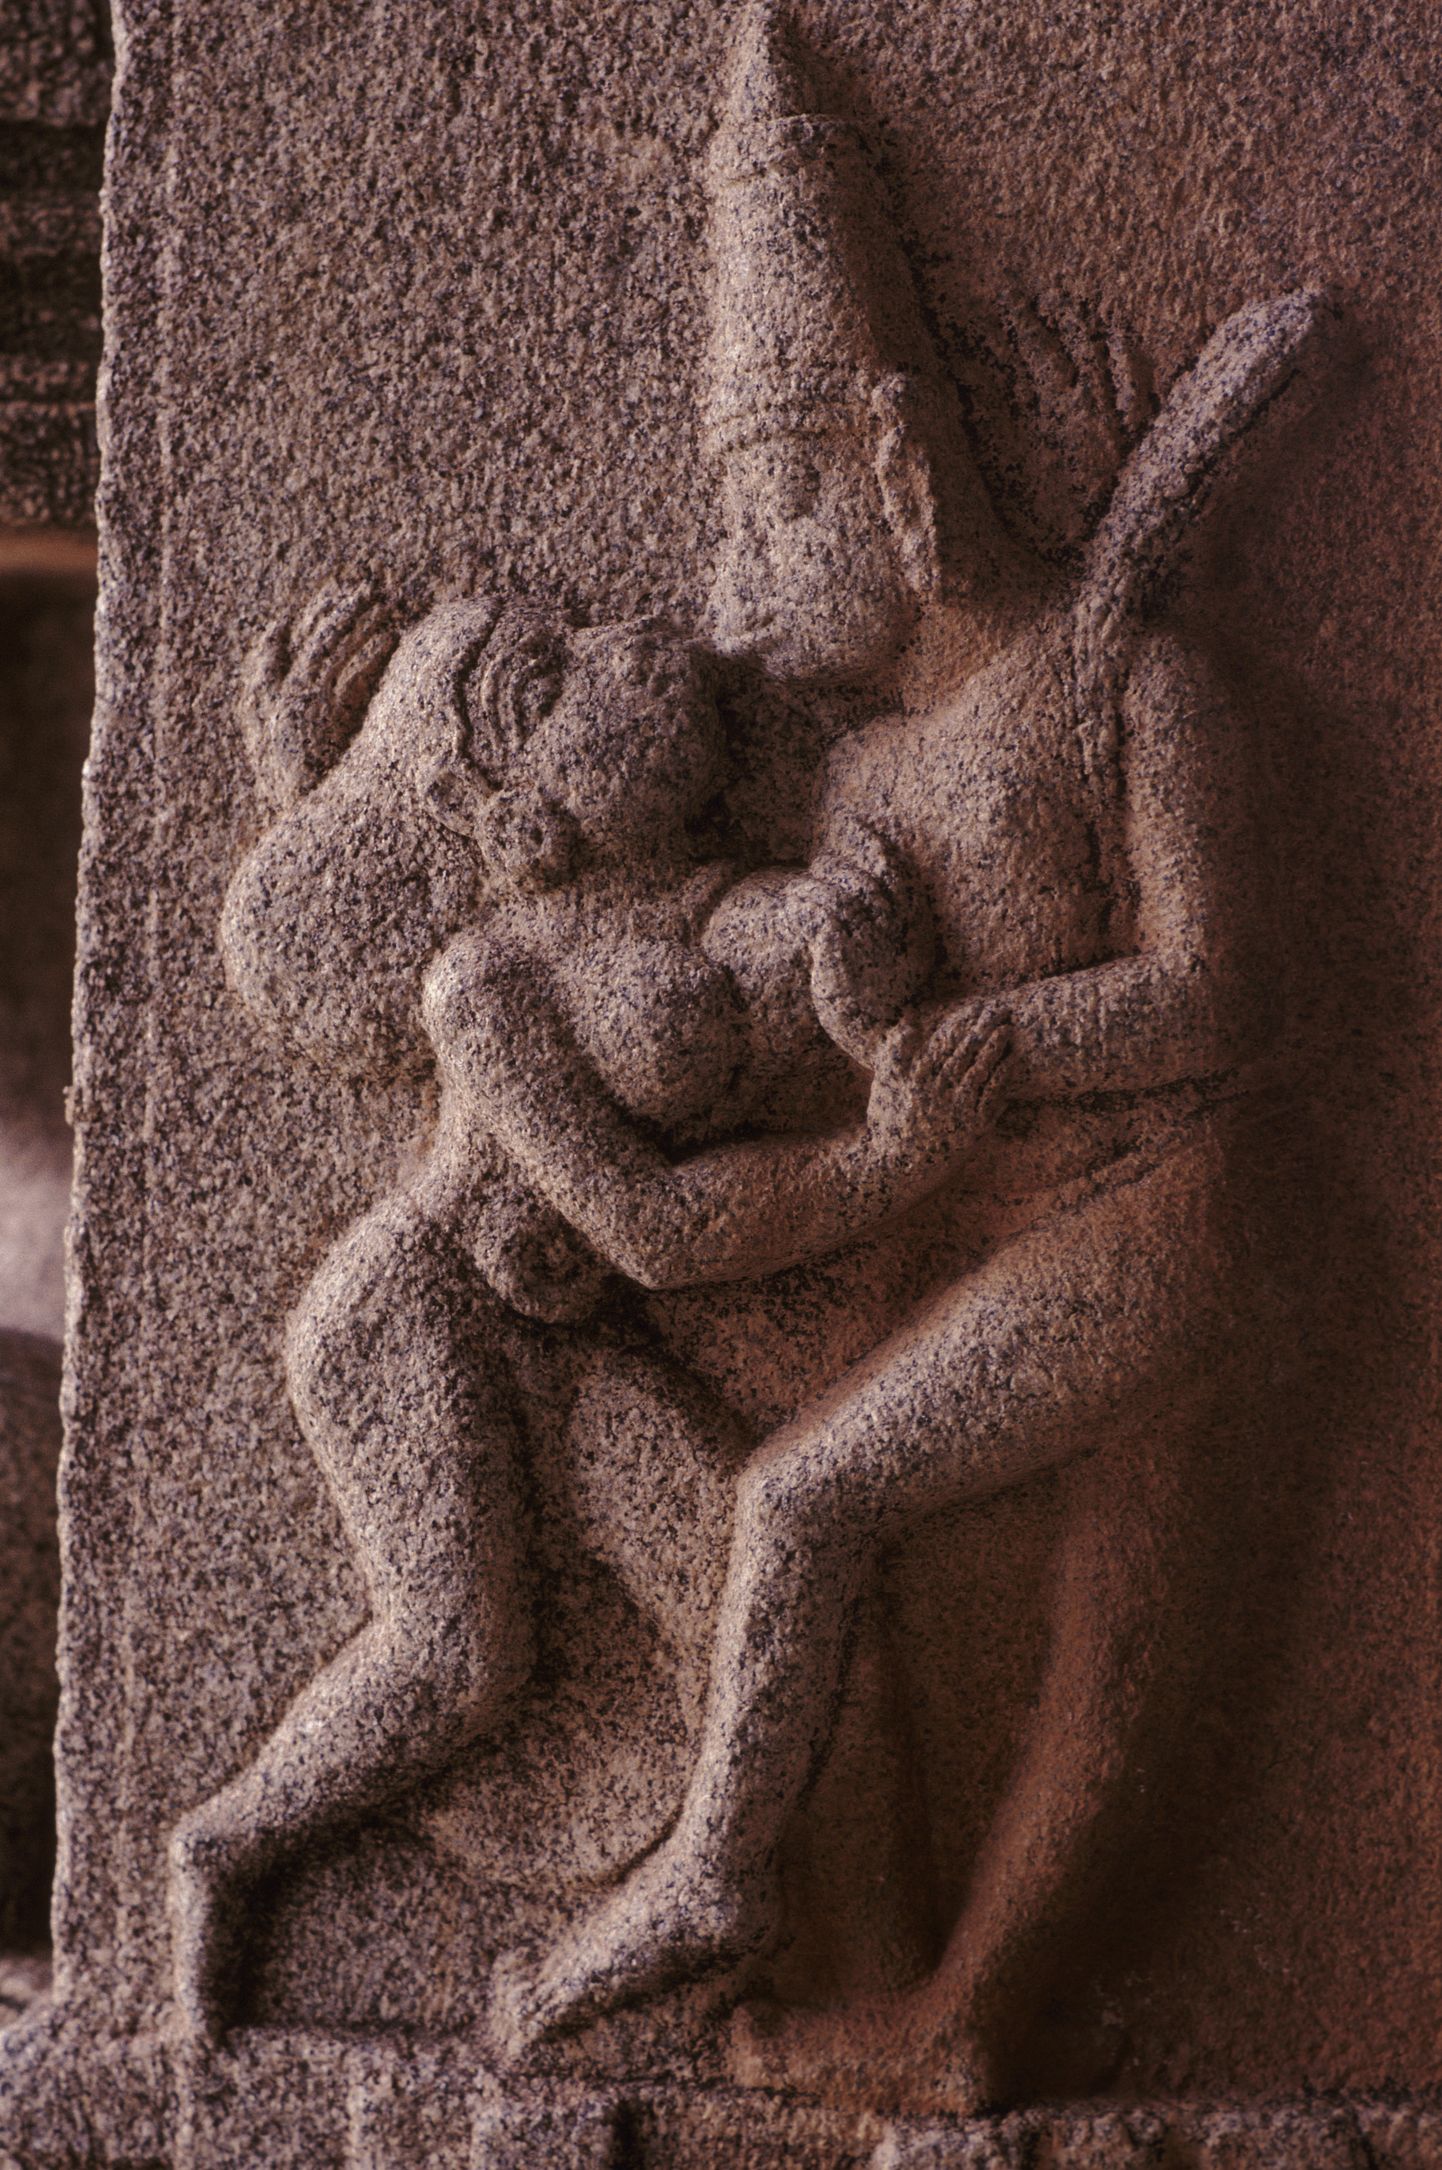 Armastajapaari kuju iidses hindu templis.